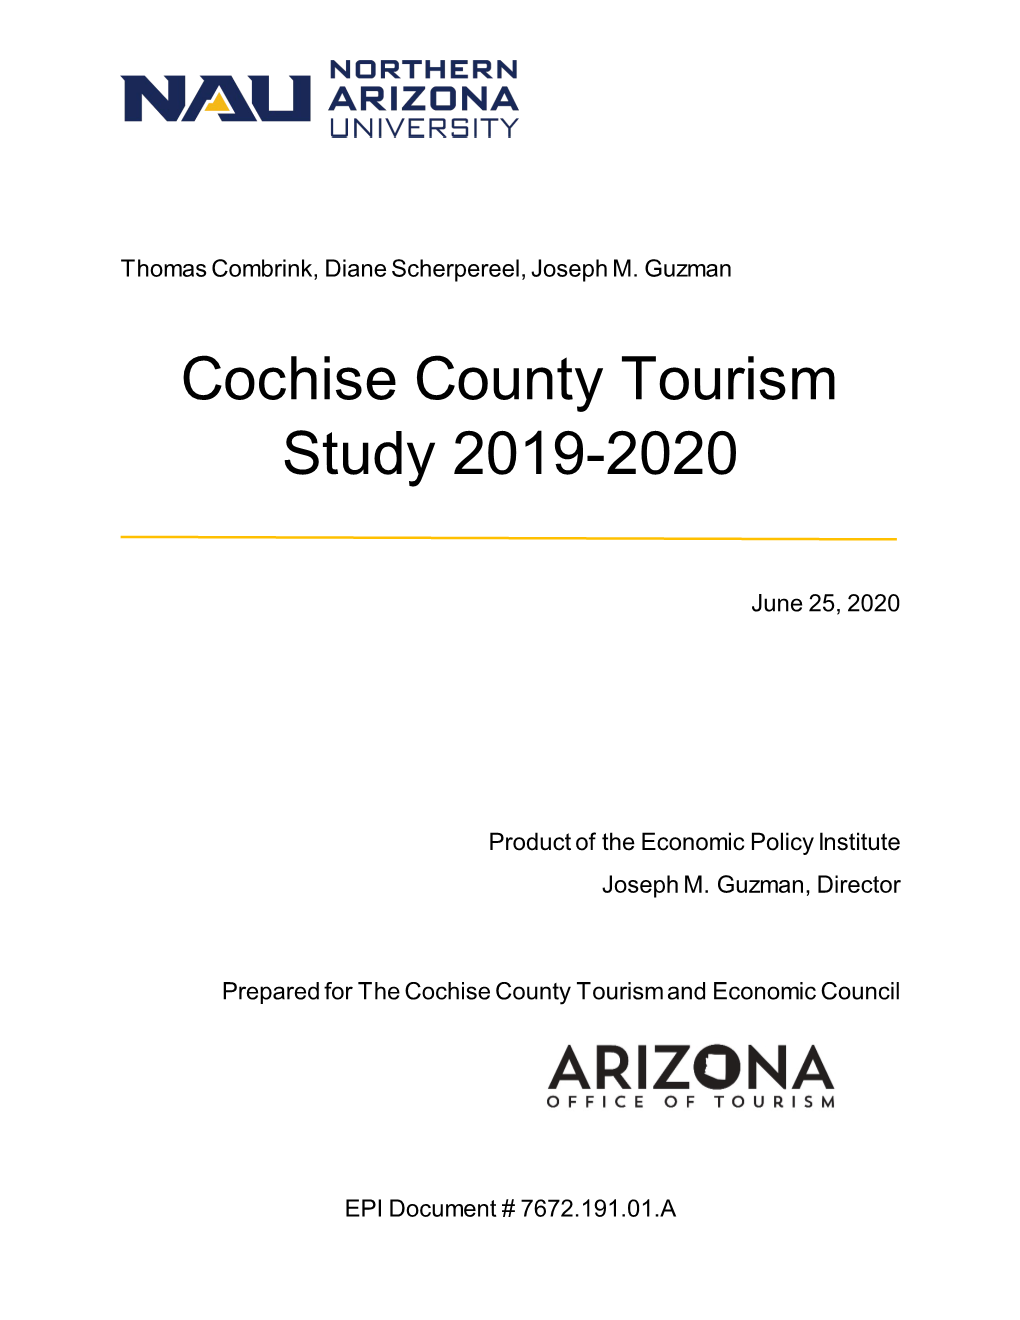 Cochise County Tourism Study 2019-2020